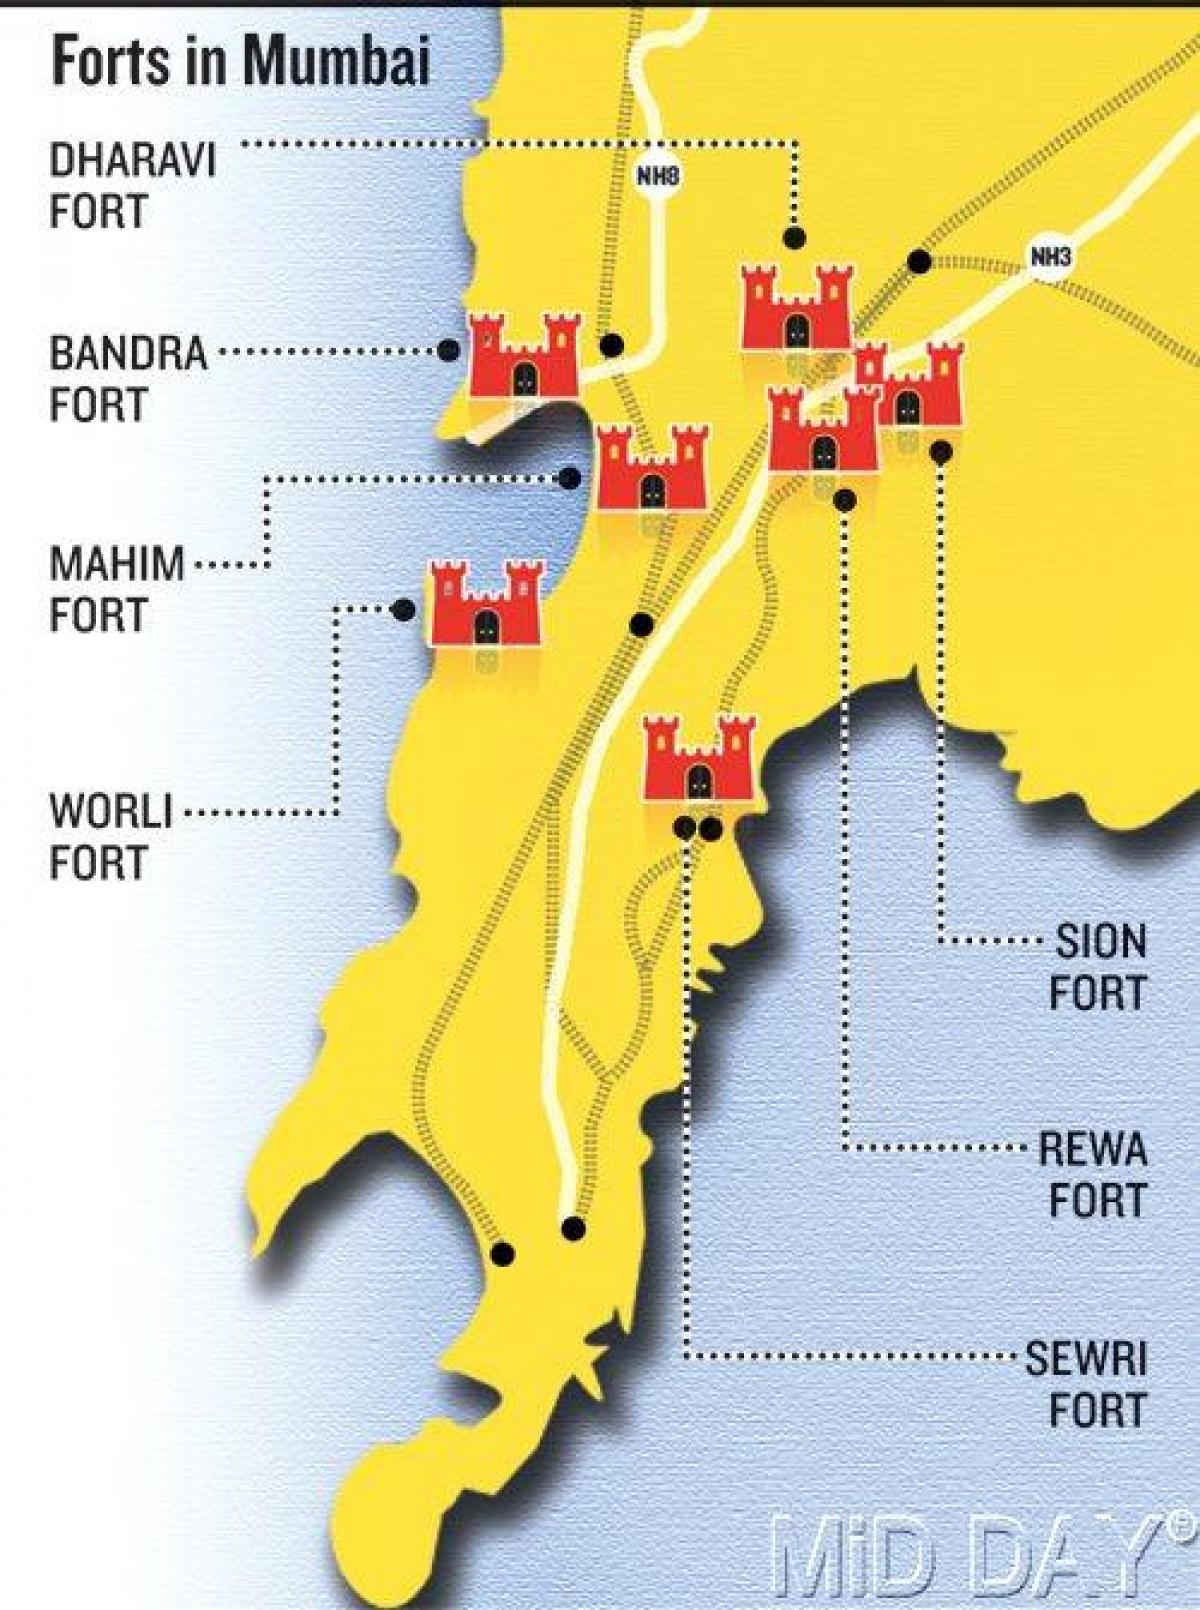 Mumbai fort ფართი რუკა